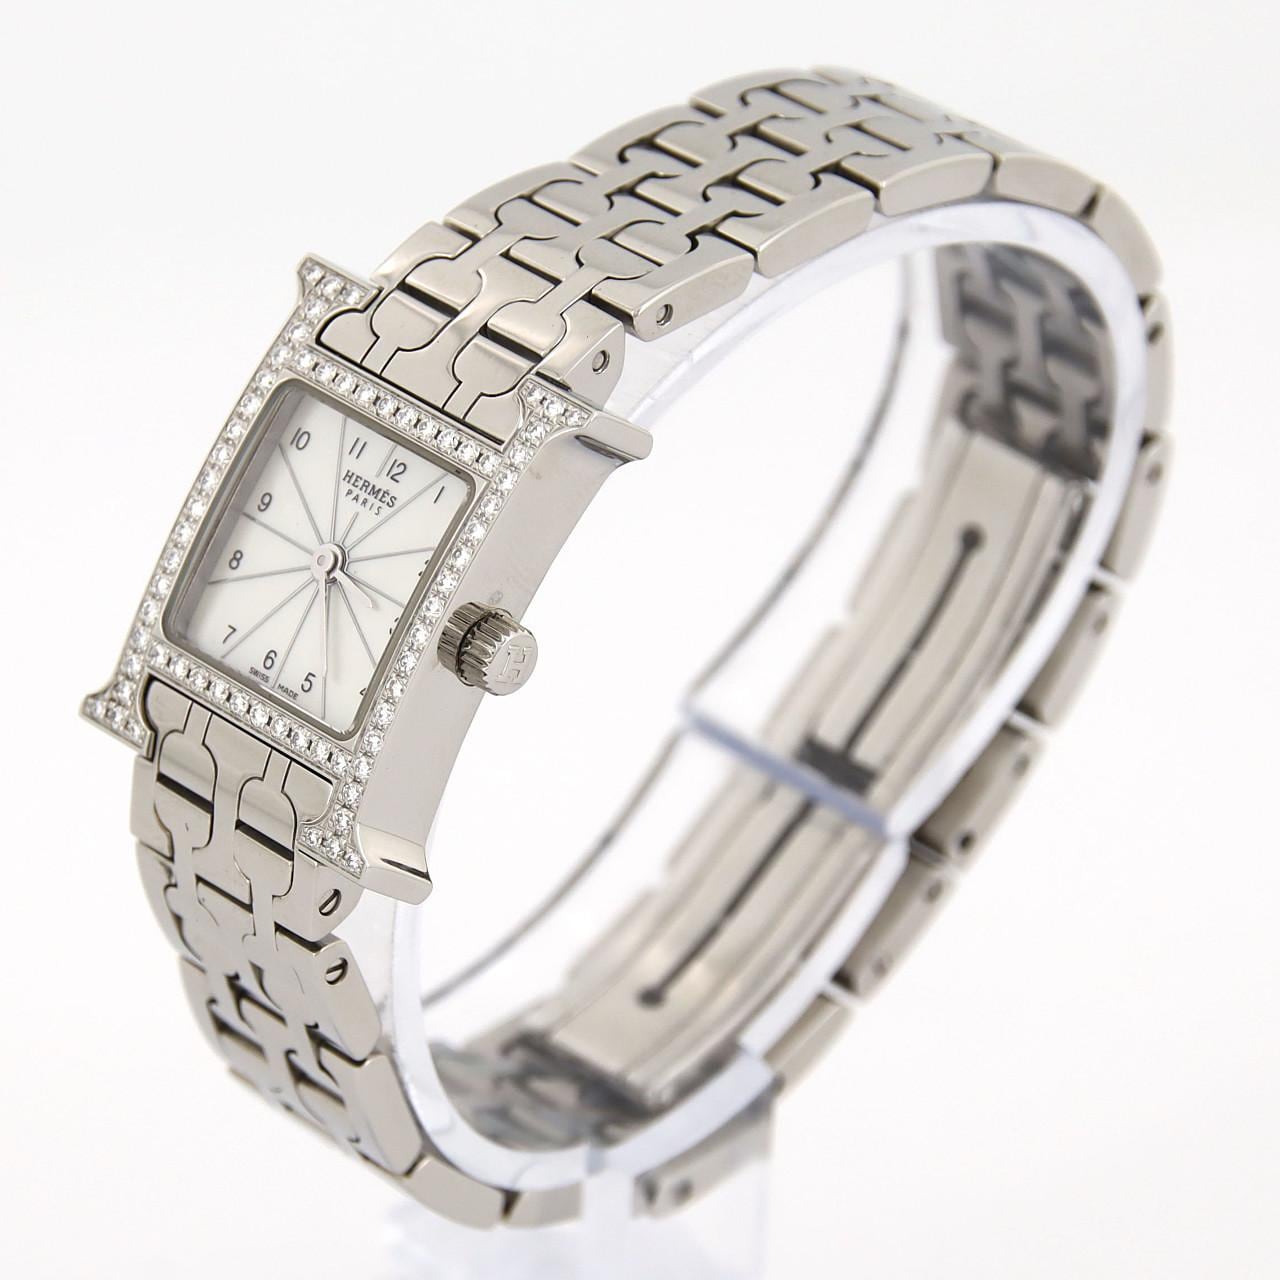 HERMES H 手表/D HH1.130 不锈钢石英